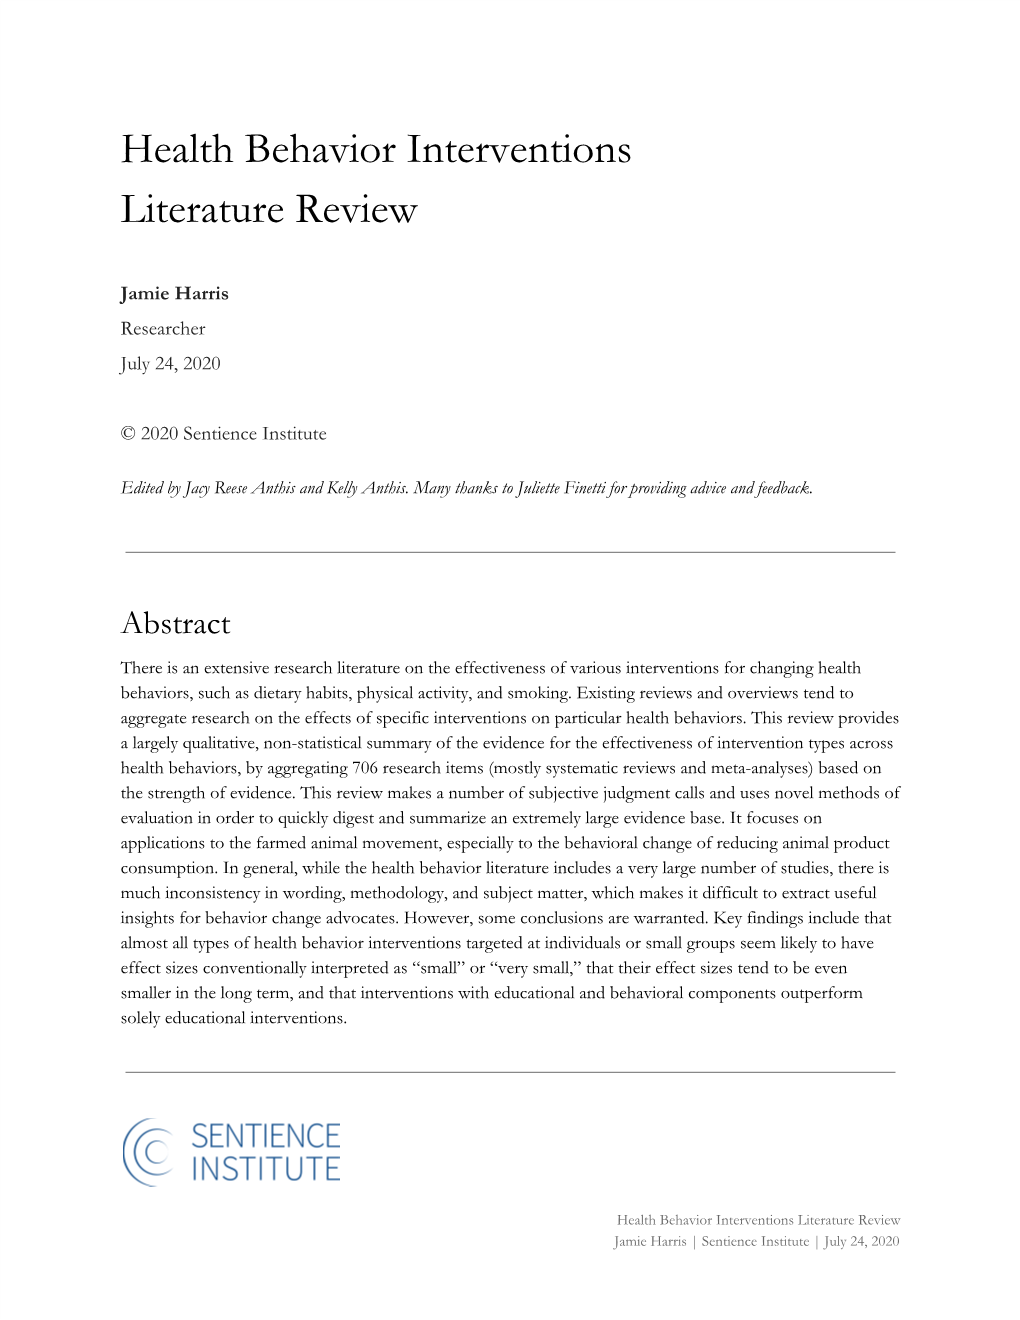 Health Behavior Interventions Literature Review